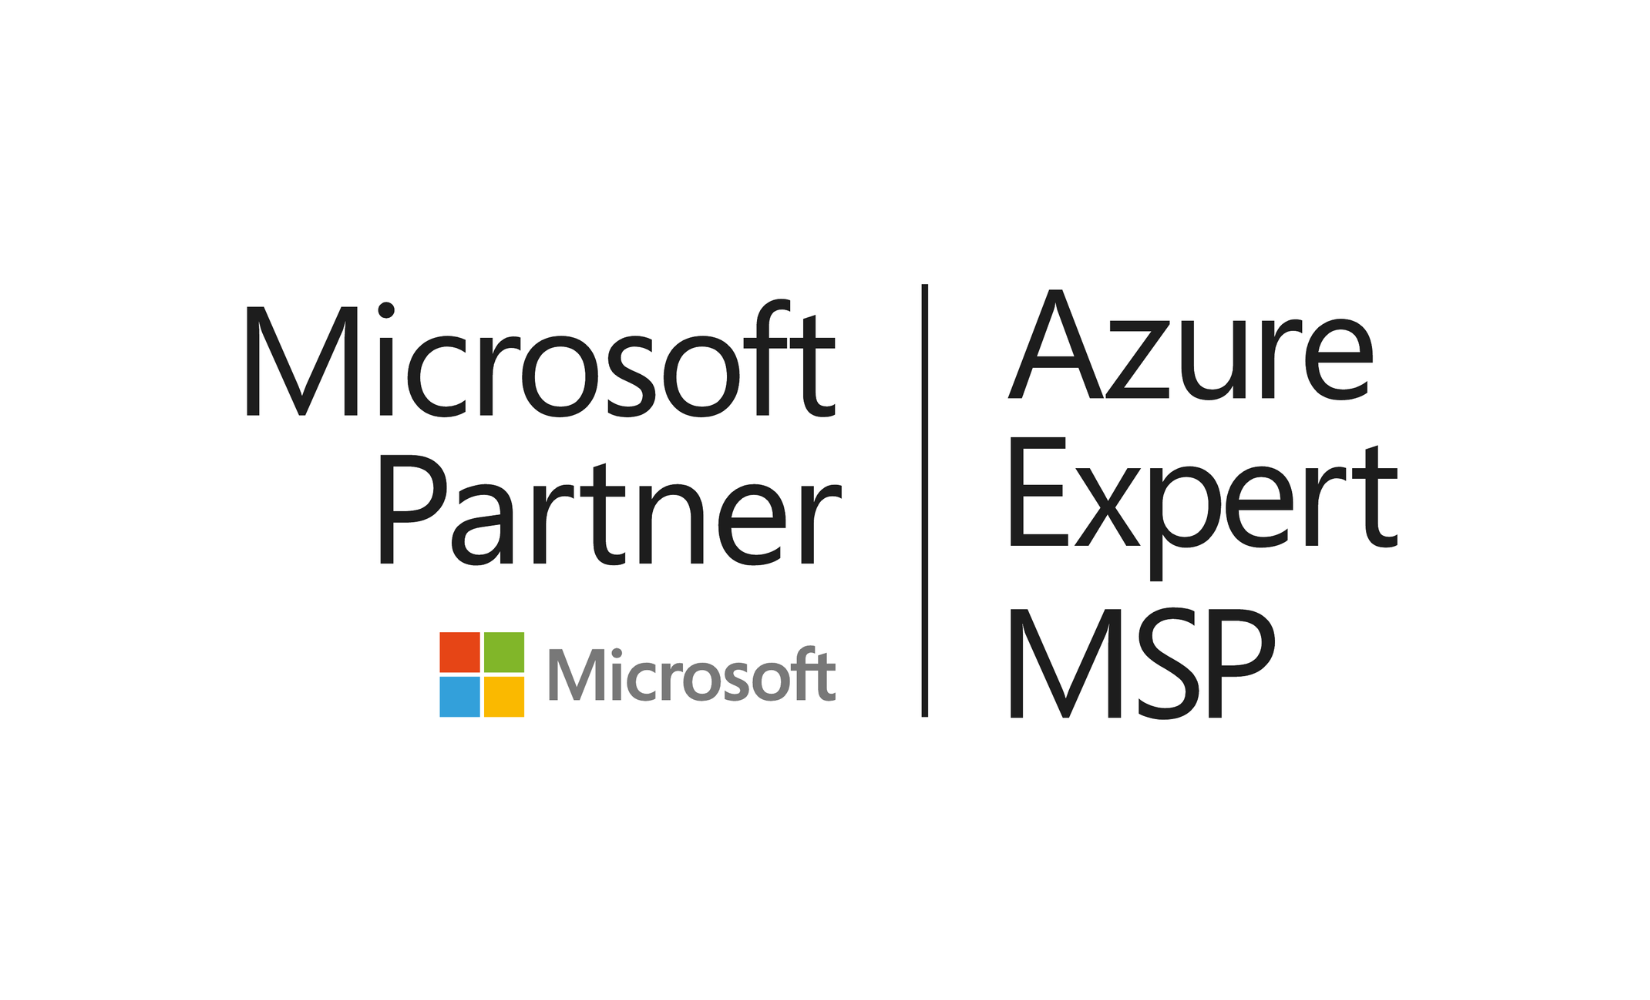 Microsoft Azure Expert MSP logo